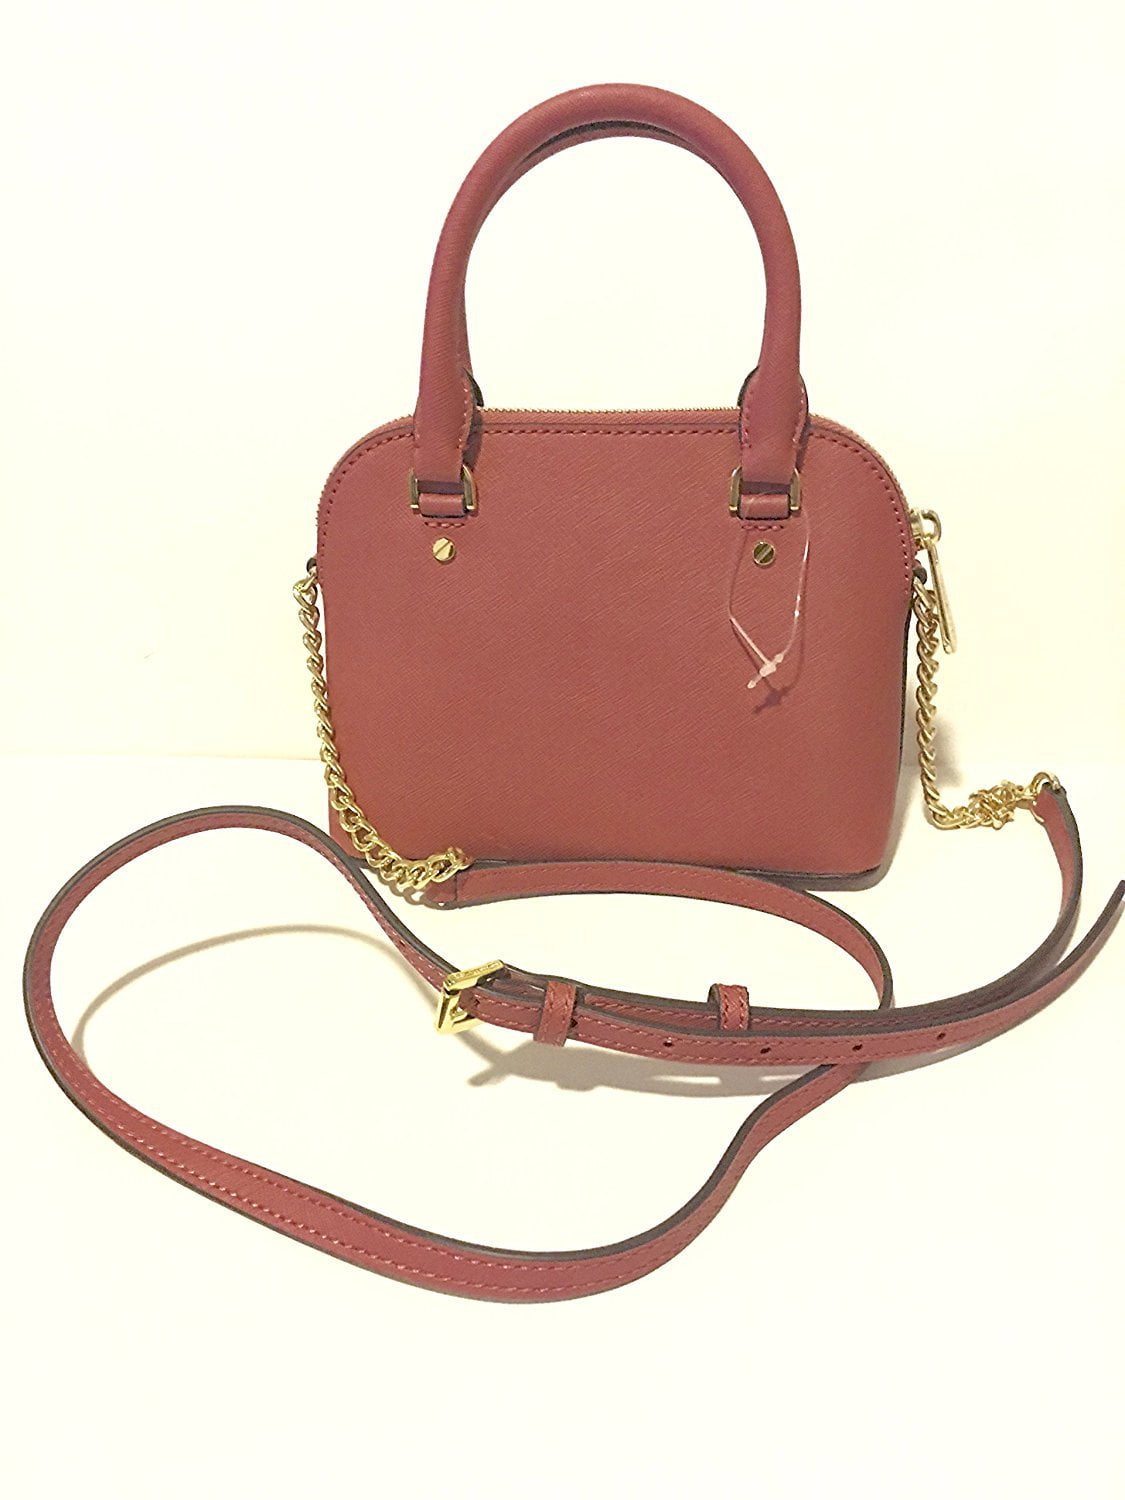 Michael Kors Cindy Mini Crossbody Tulip Pink Leather Bag Handbag Purse